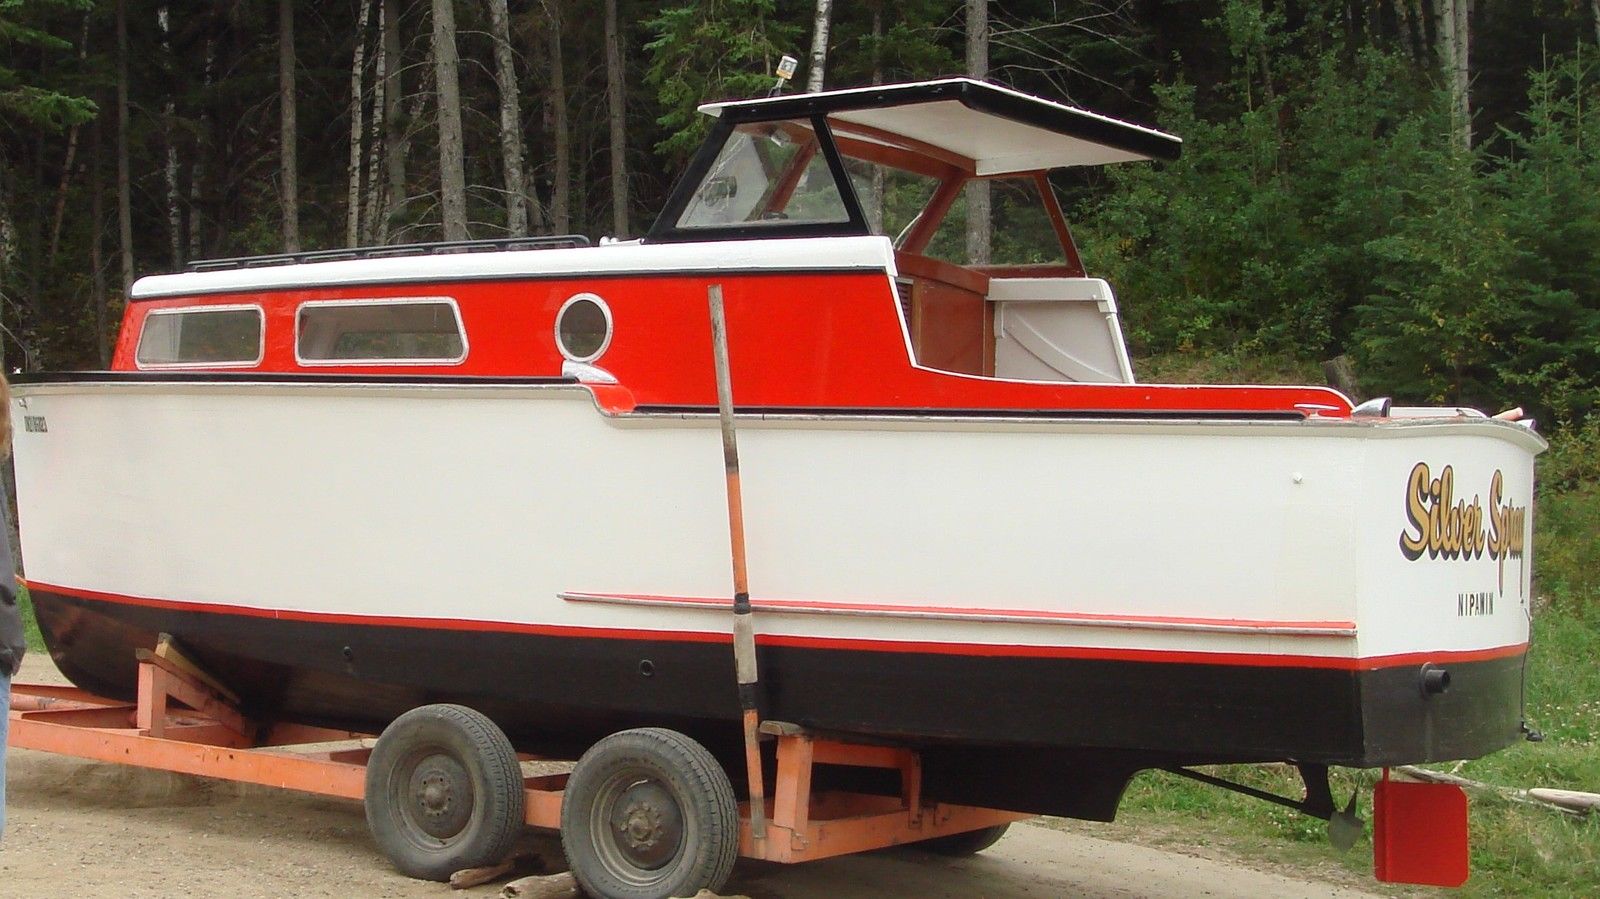 Homemade Vintage 25' Cabin Cruiser 1967 for sale for $600 ...